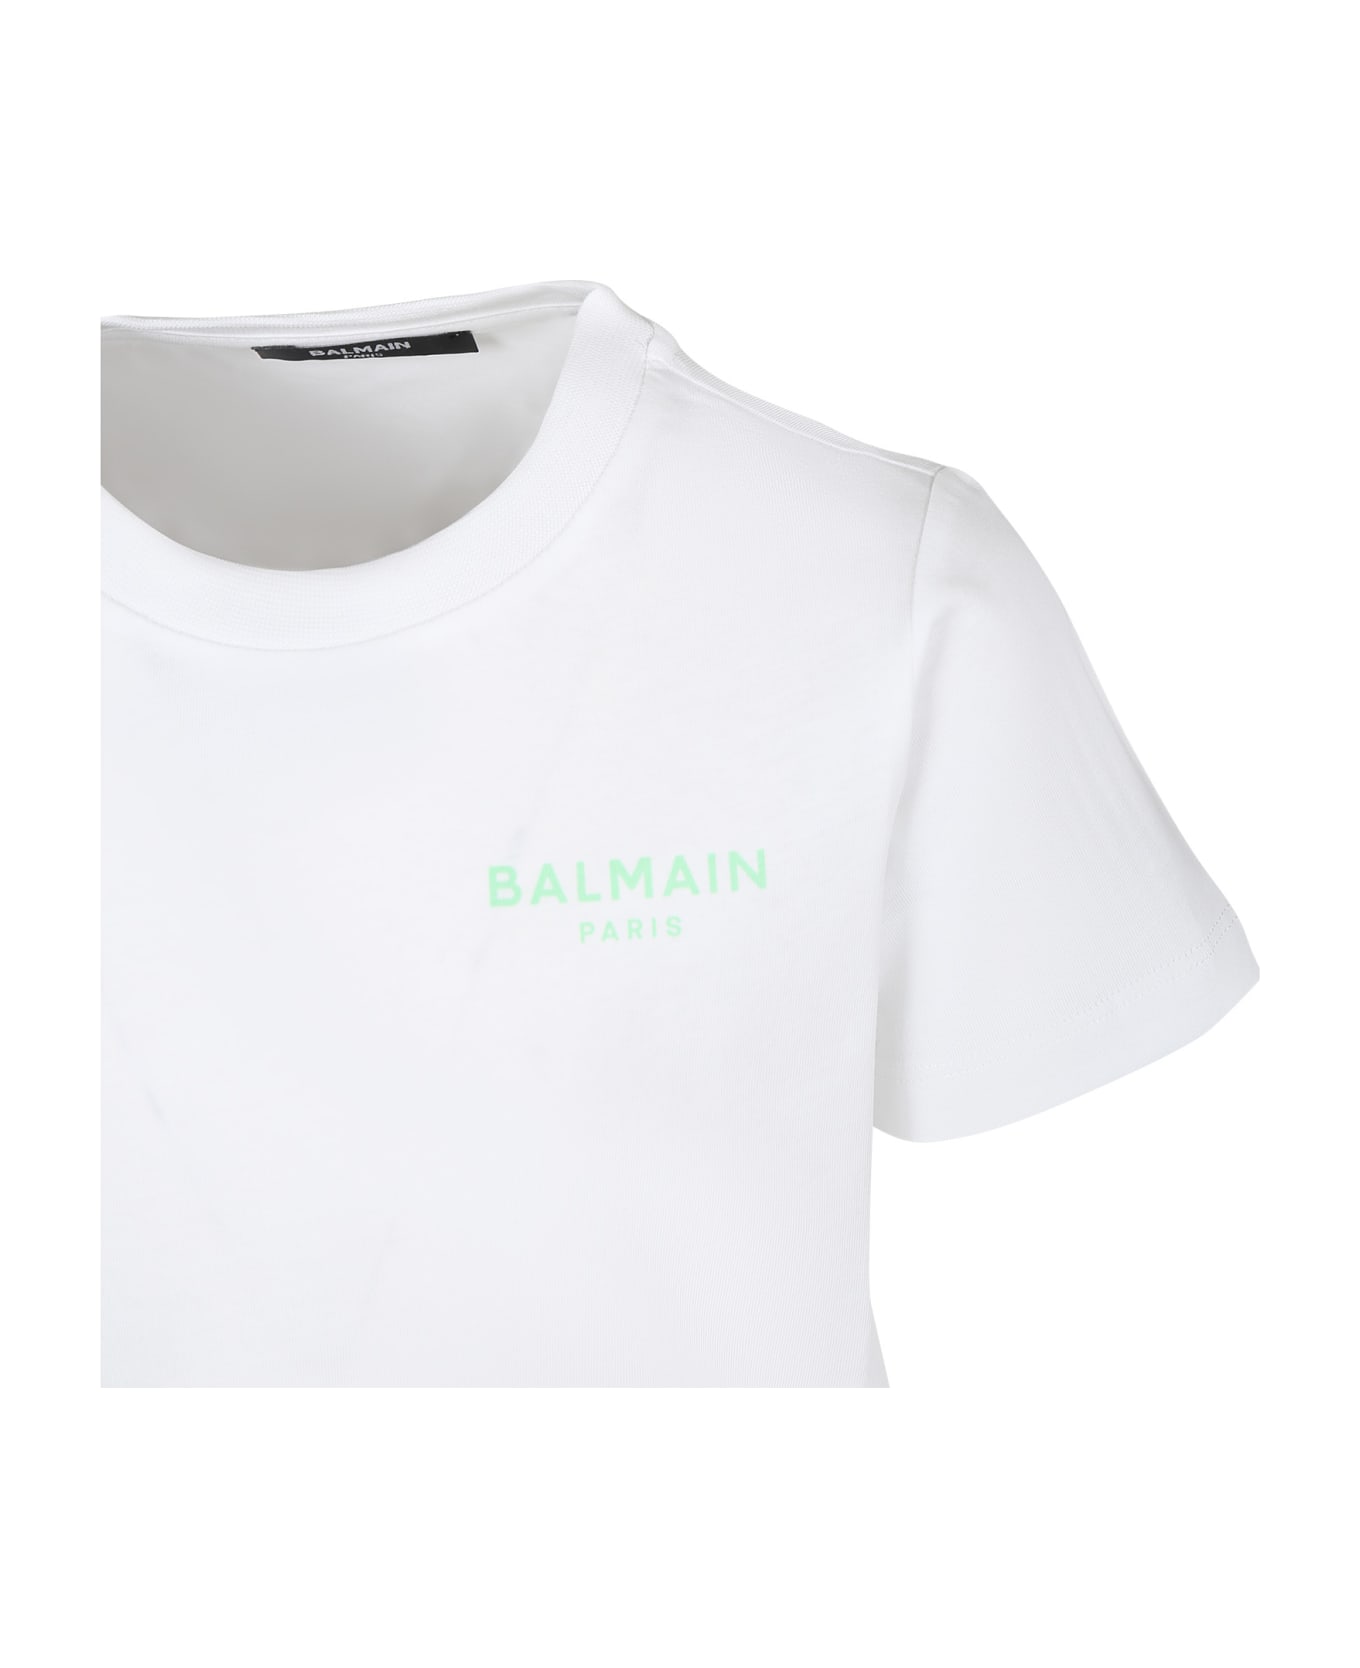 Balmain White T-shirt For Kids With Green Logo - White